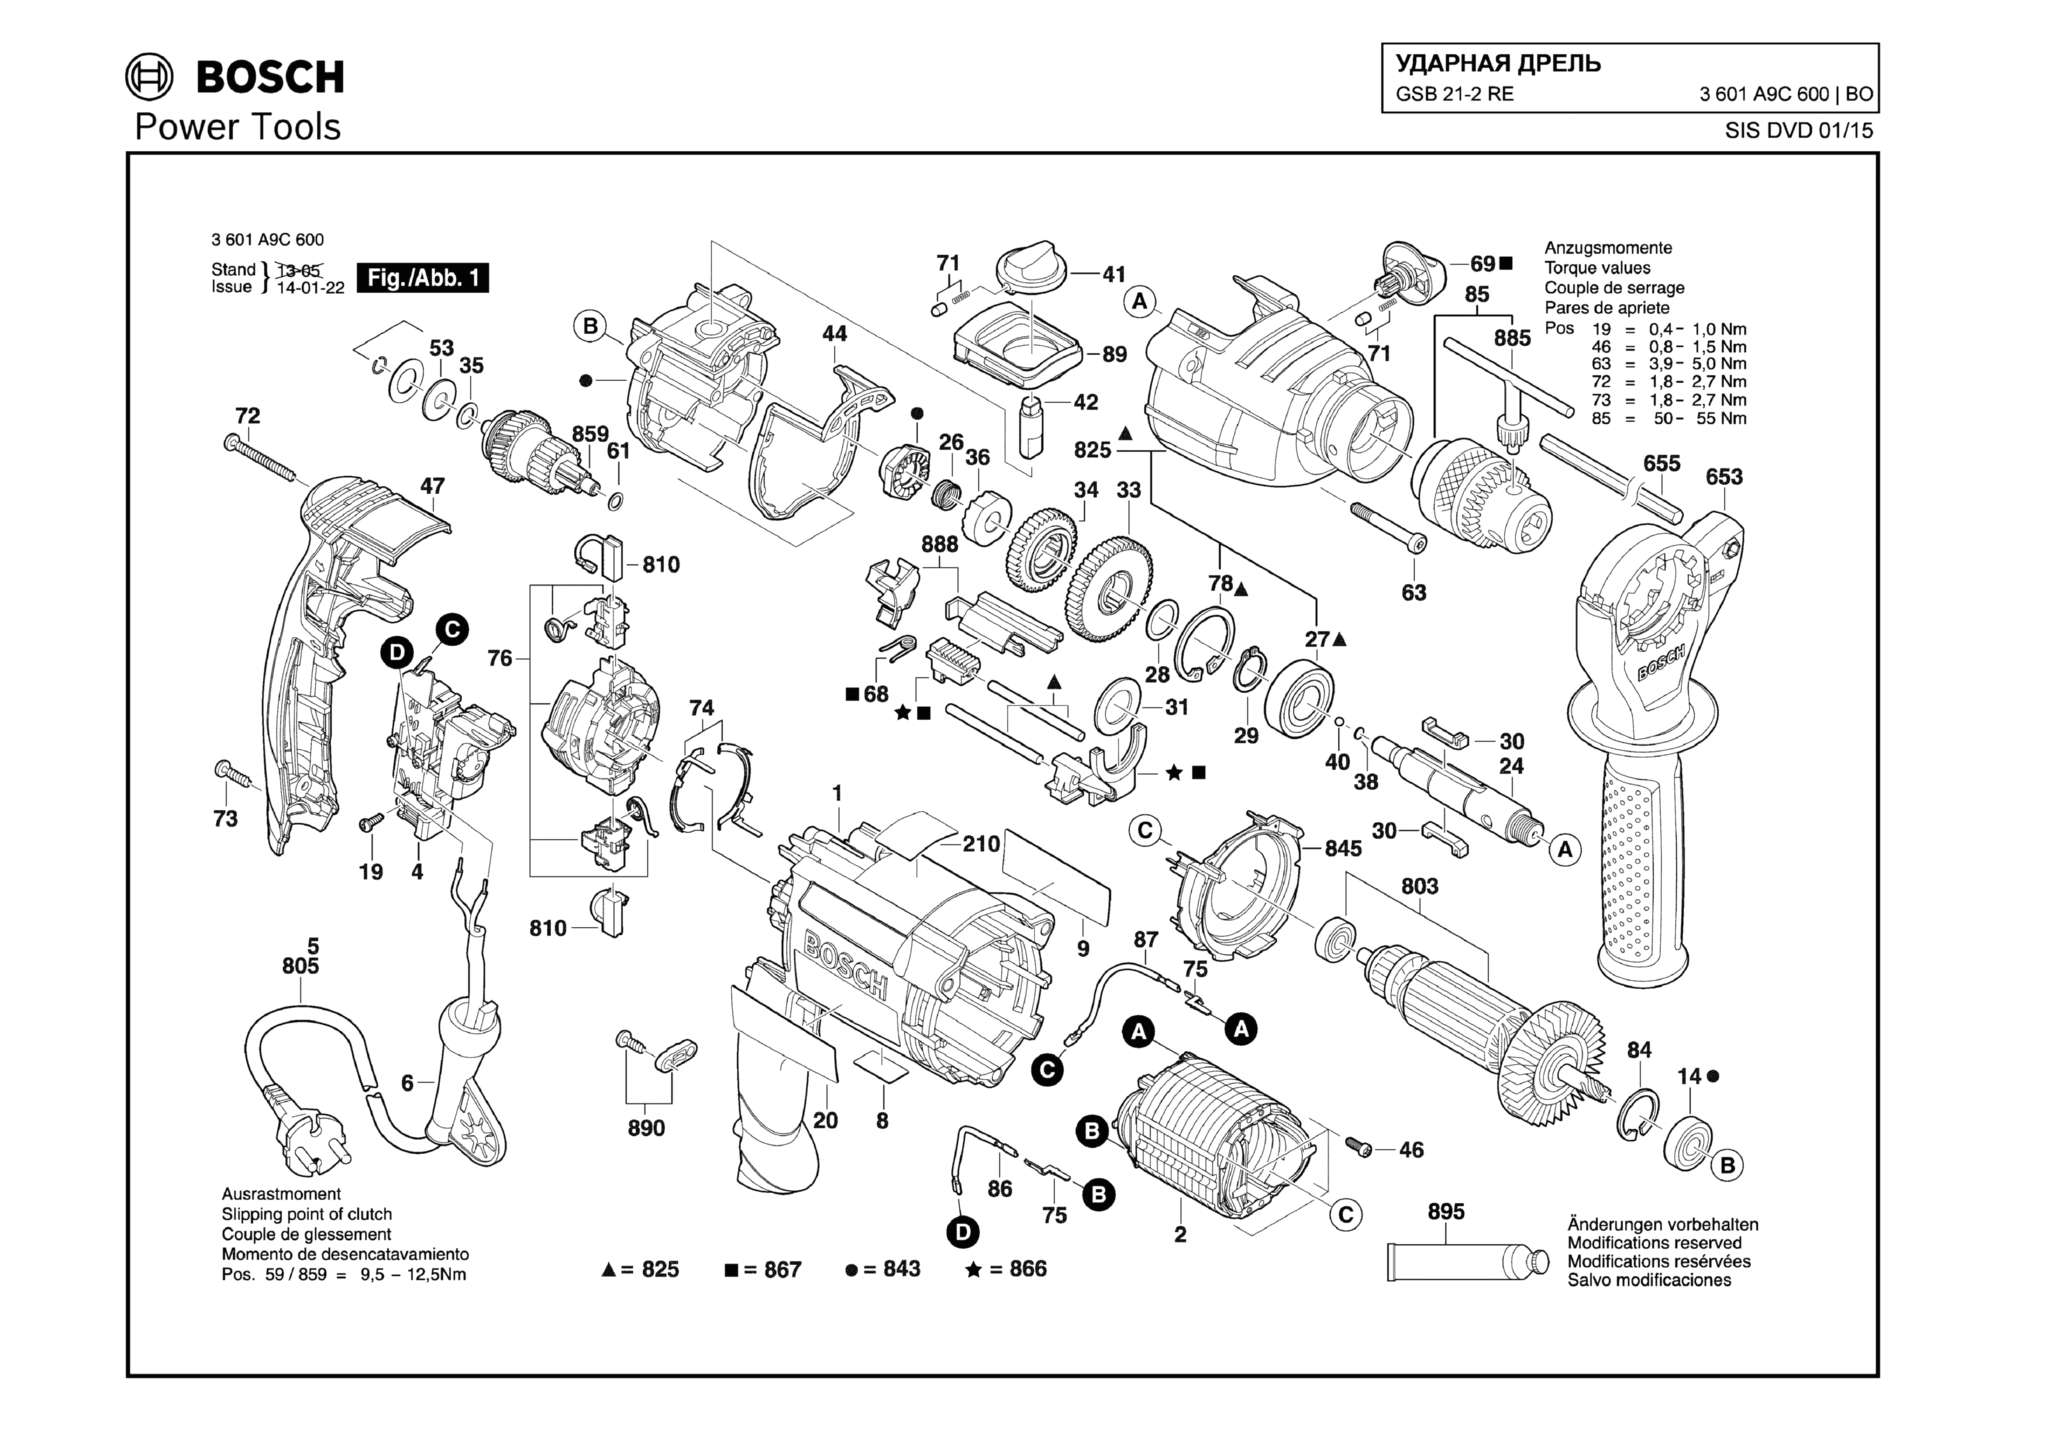 Запчасти, схема и деталировка Bosch GSB 21-2 RE (ТИП 3601A9C600)